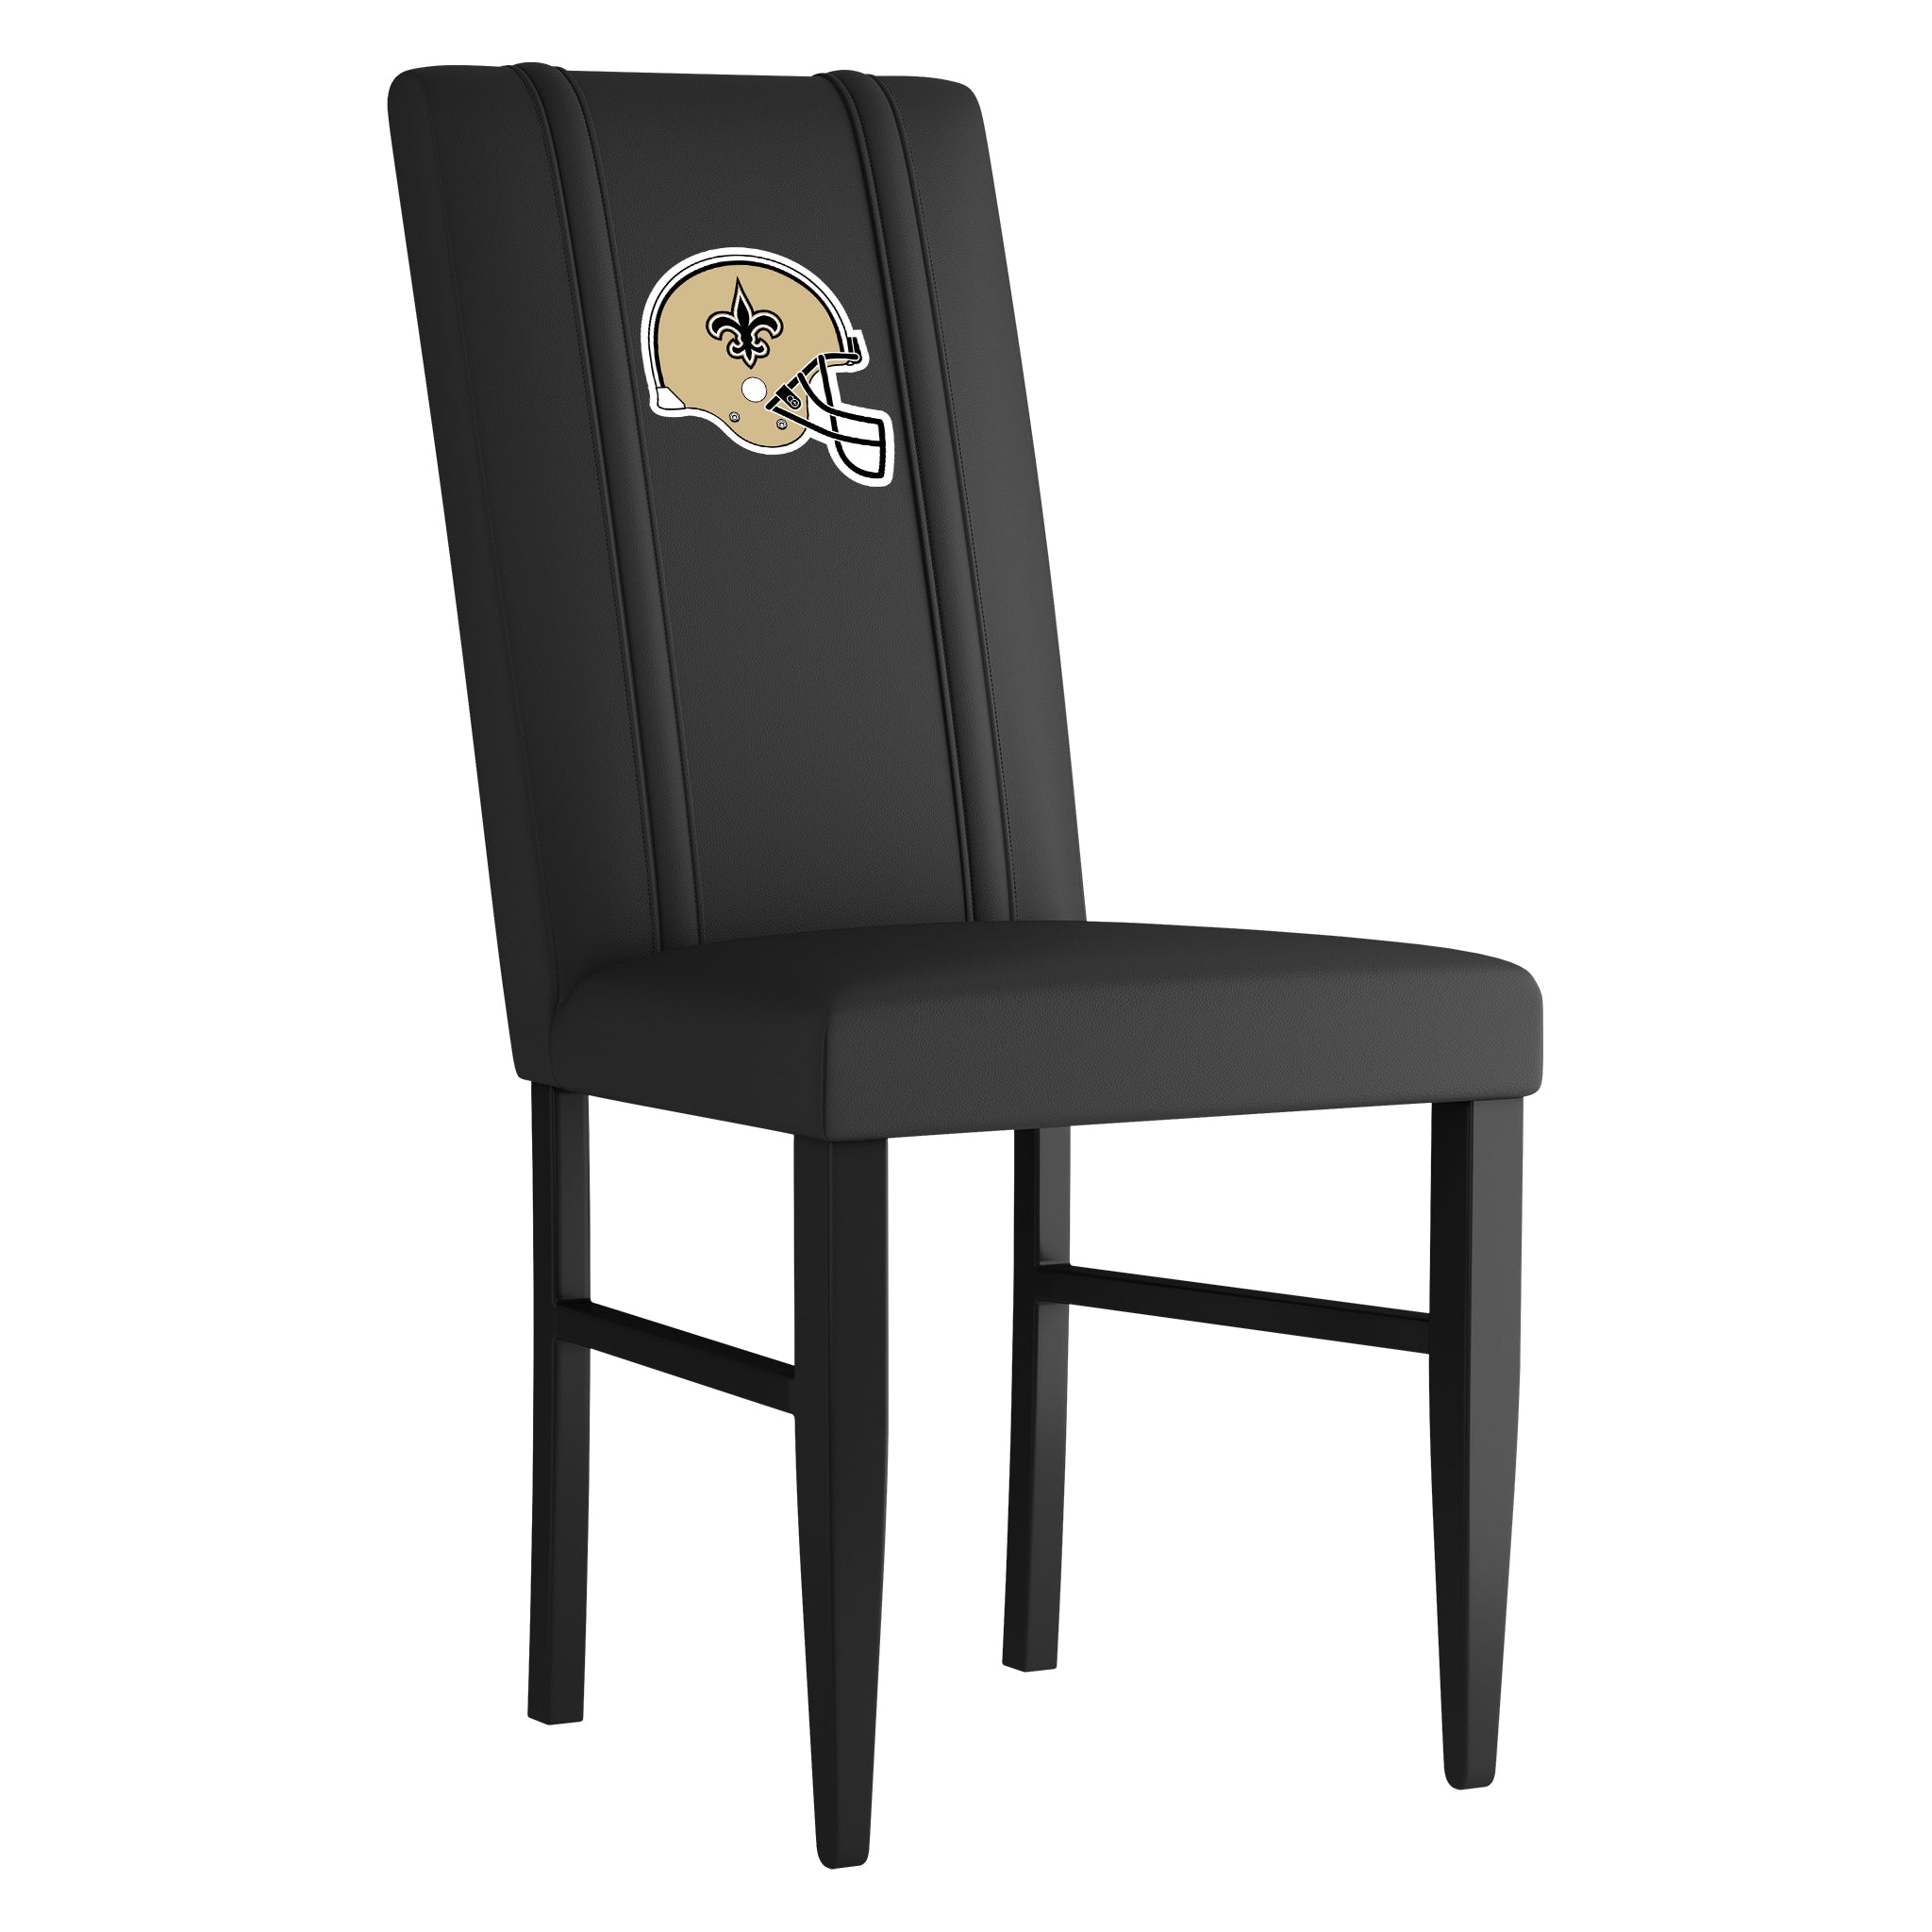 New Orleans Saints Side Chair 2000